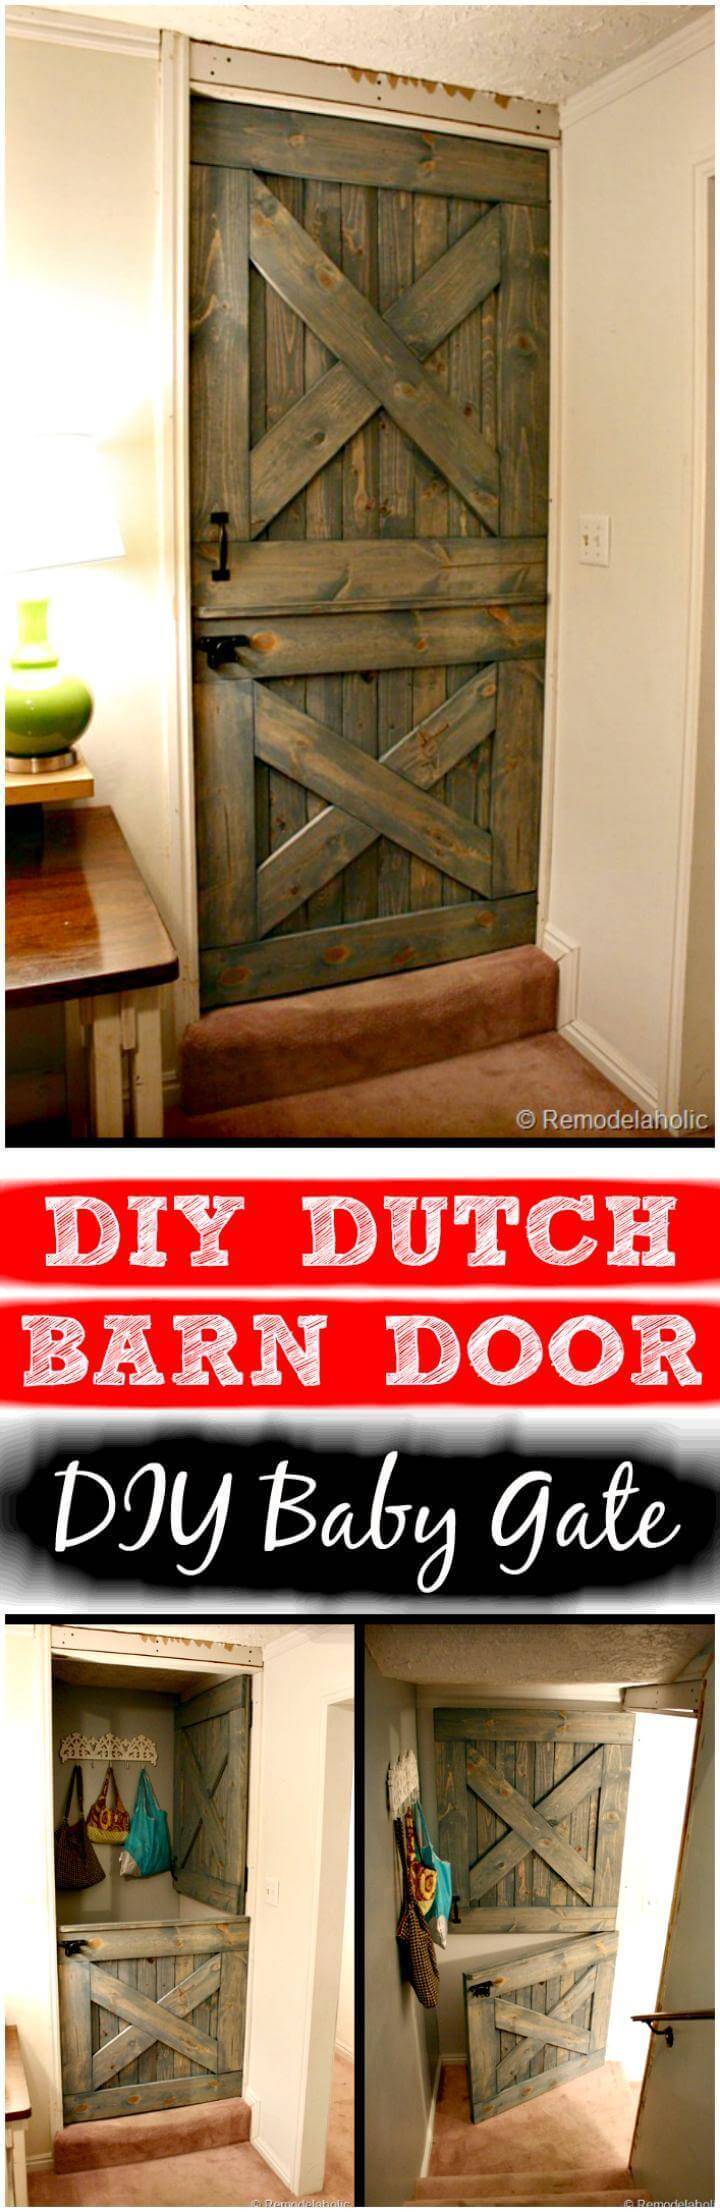 DIY dutch barn door or baby gate